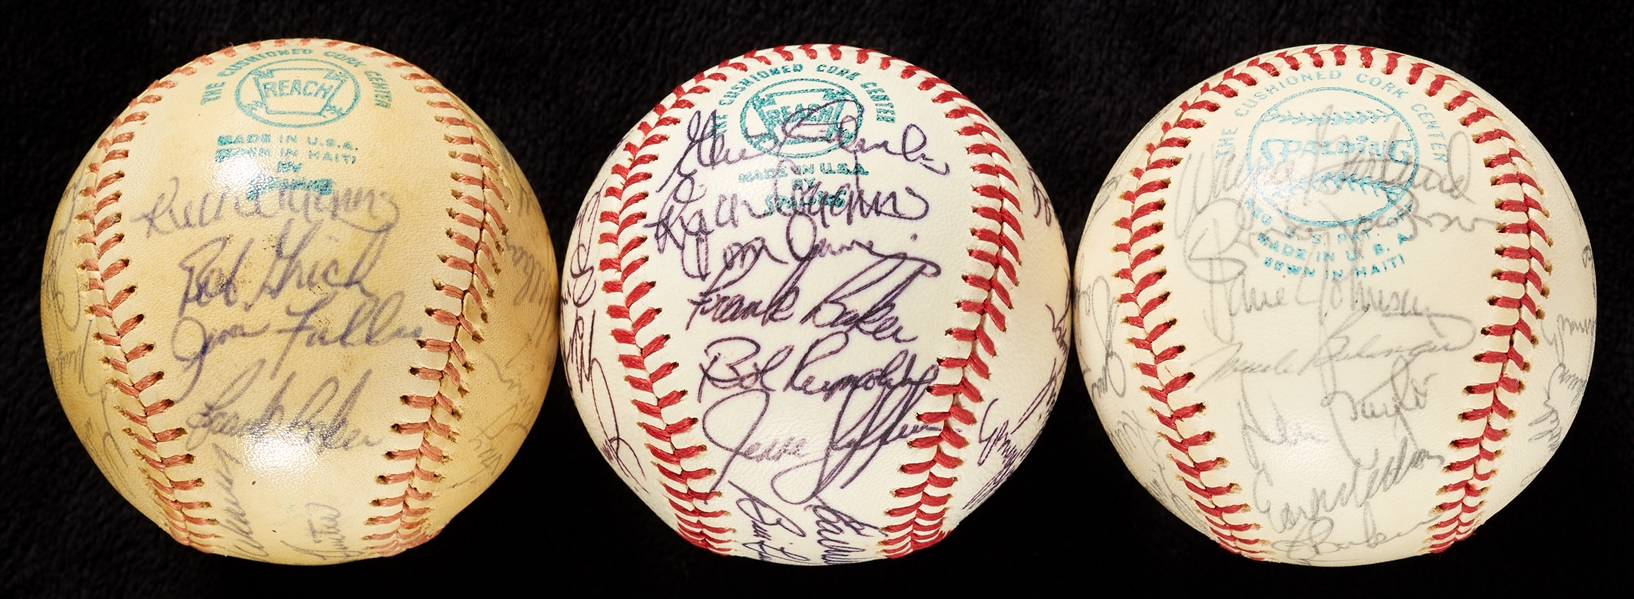 1974 Baltimore Orioles Team-Signed Baseballs Group (3)